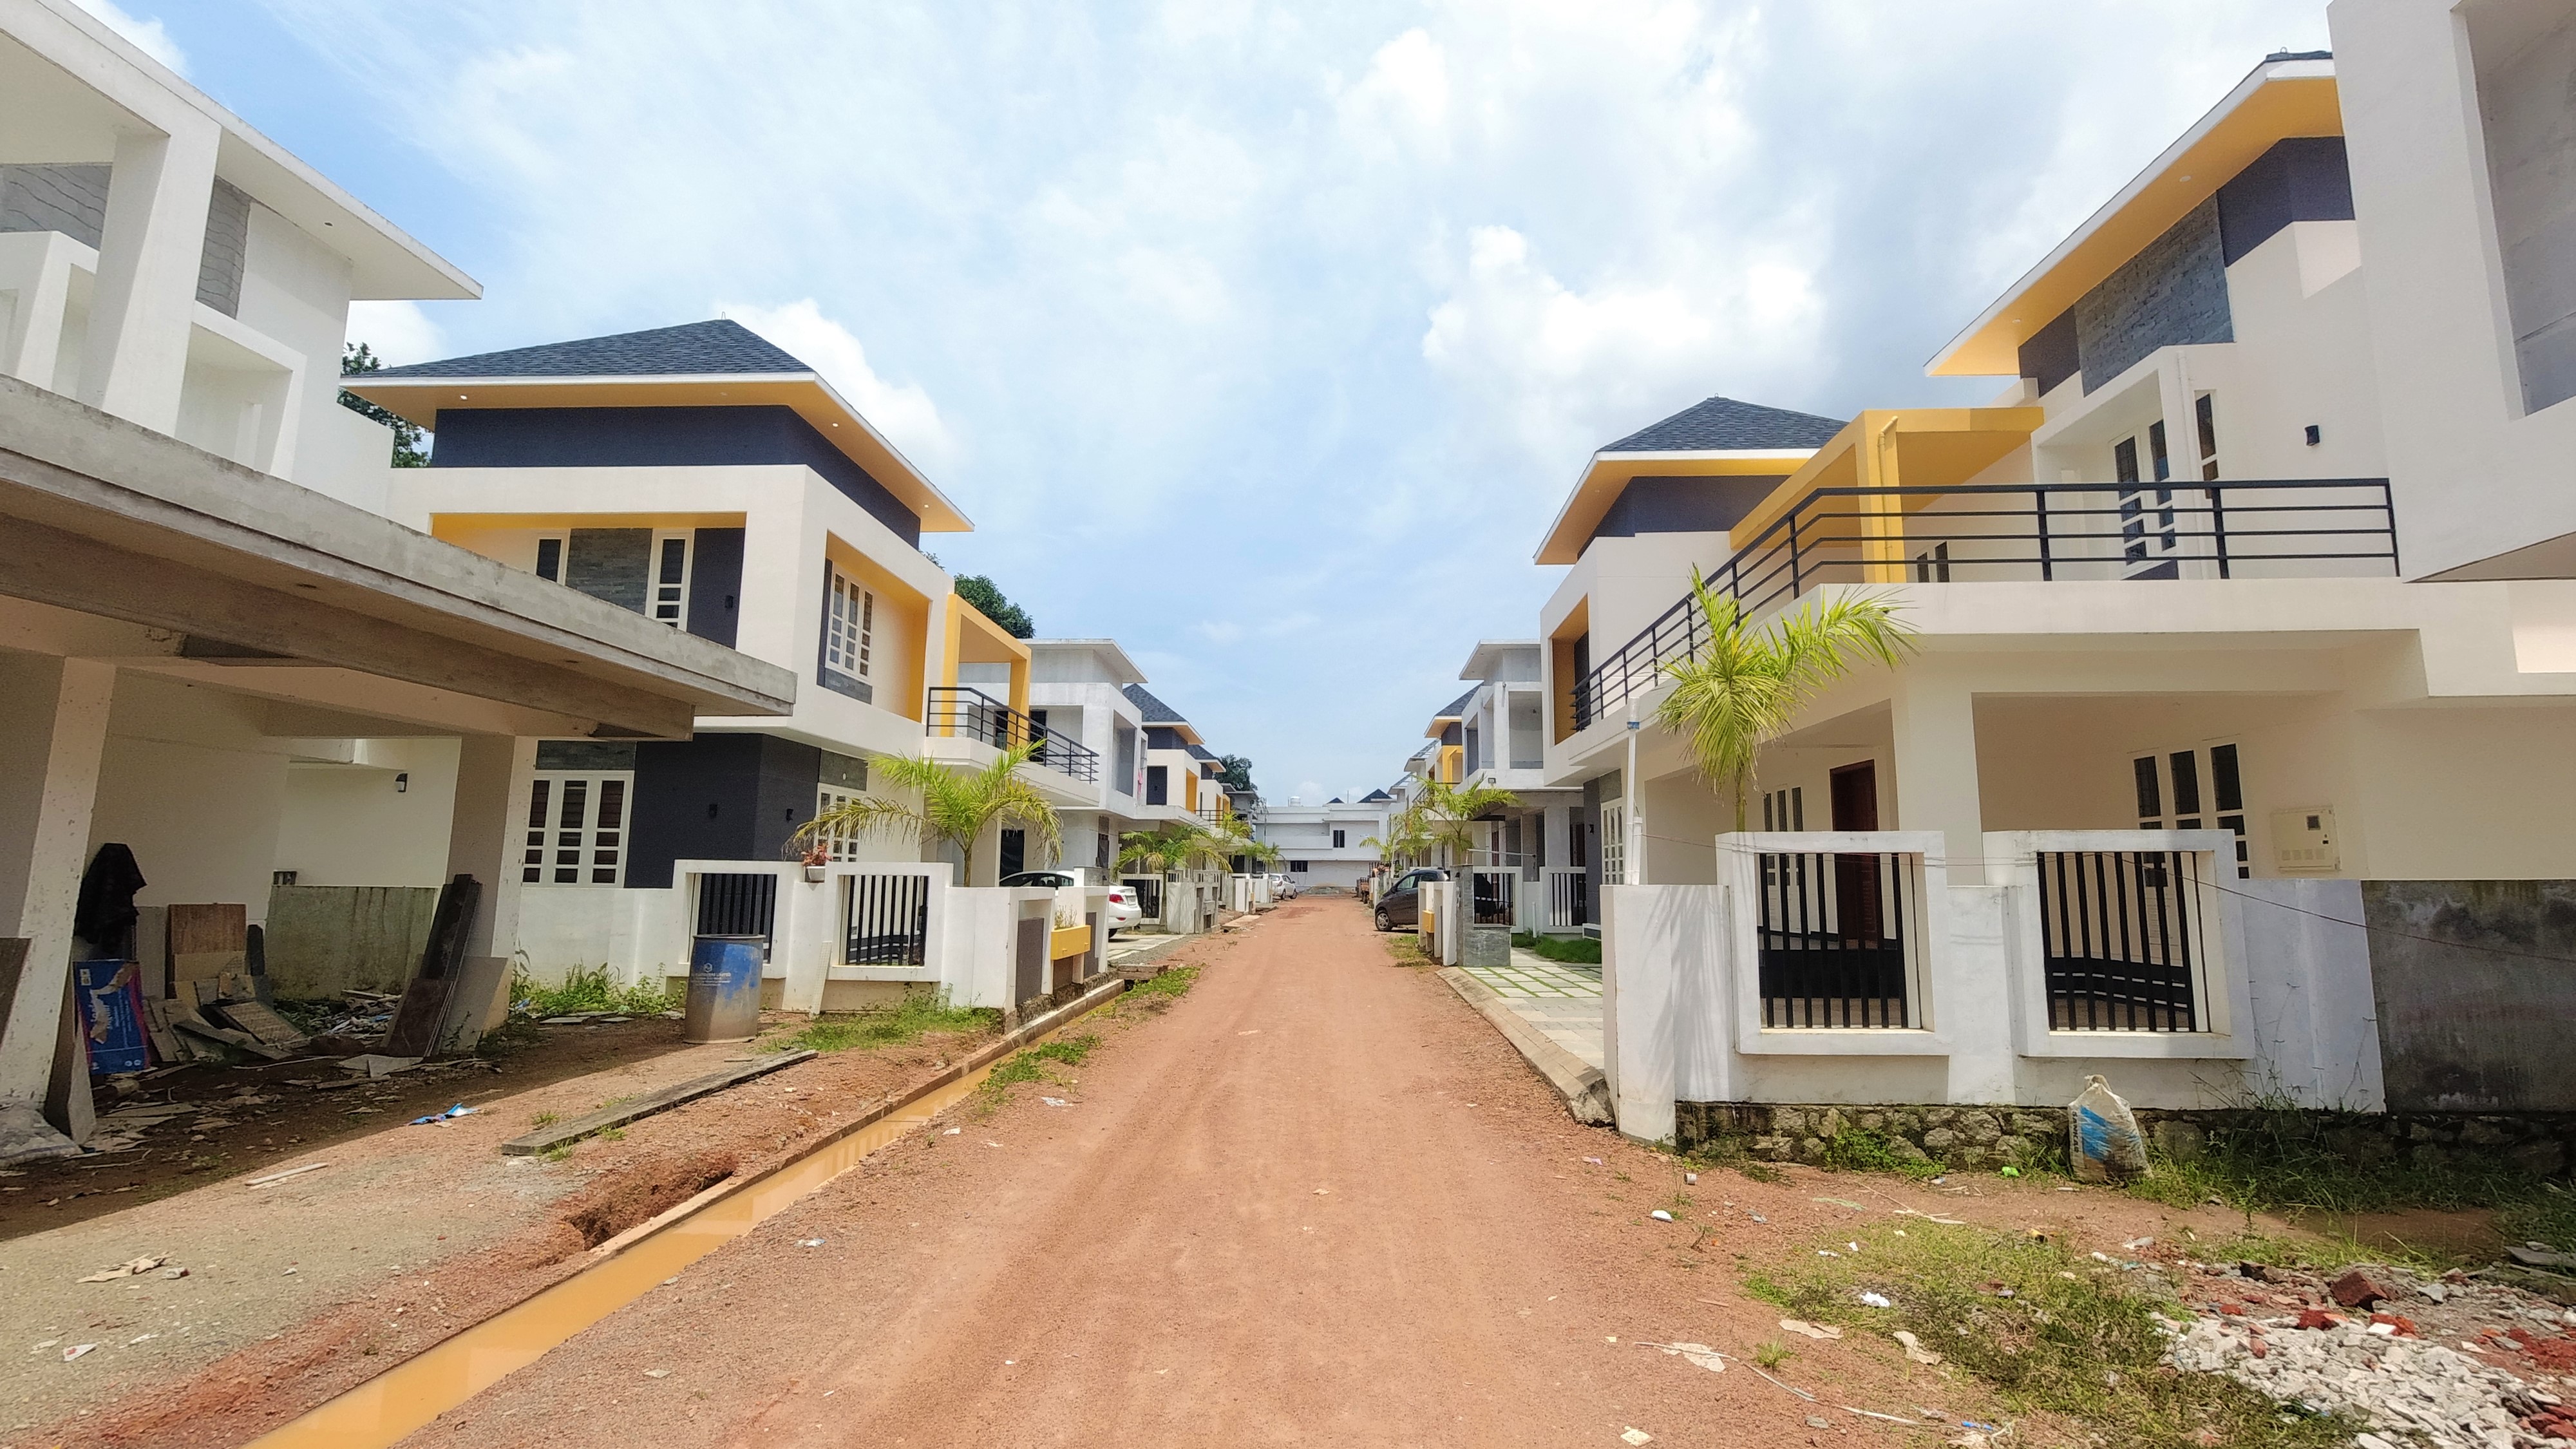 4 bhk luxury villa builders in pathanamthitta